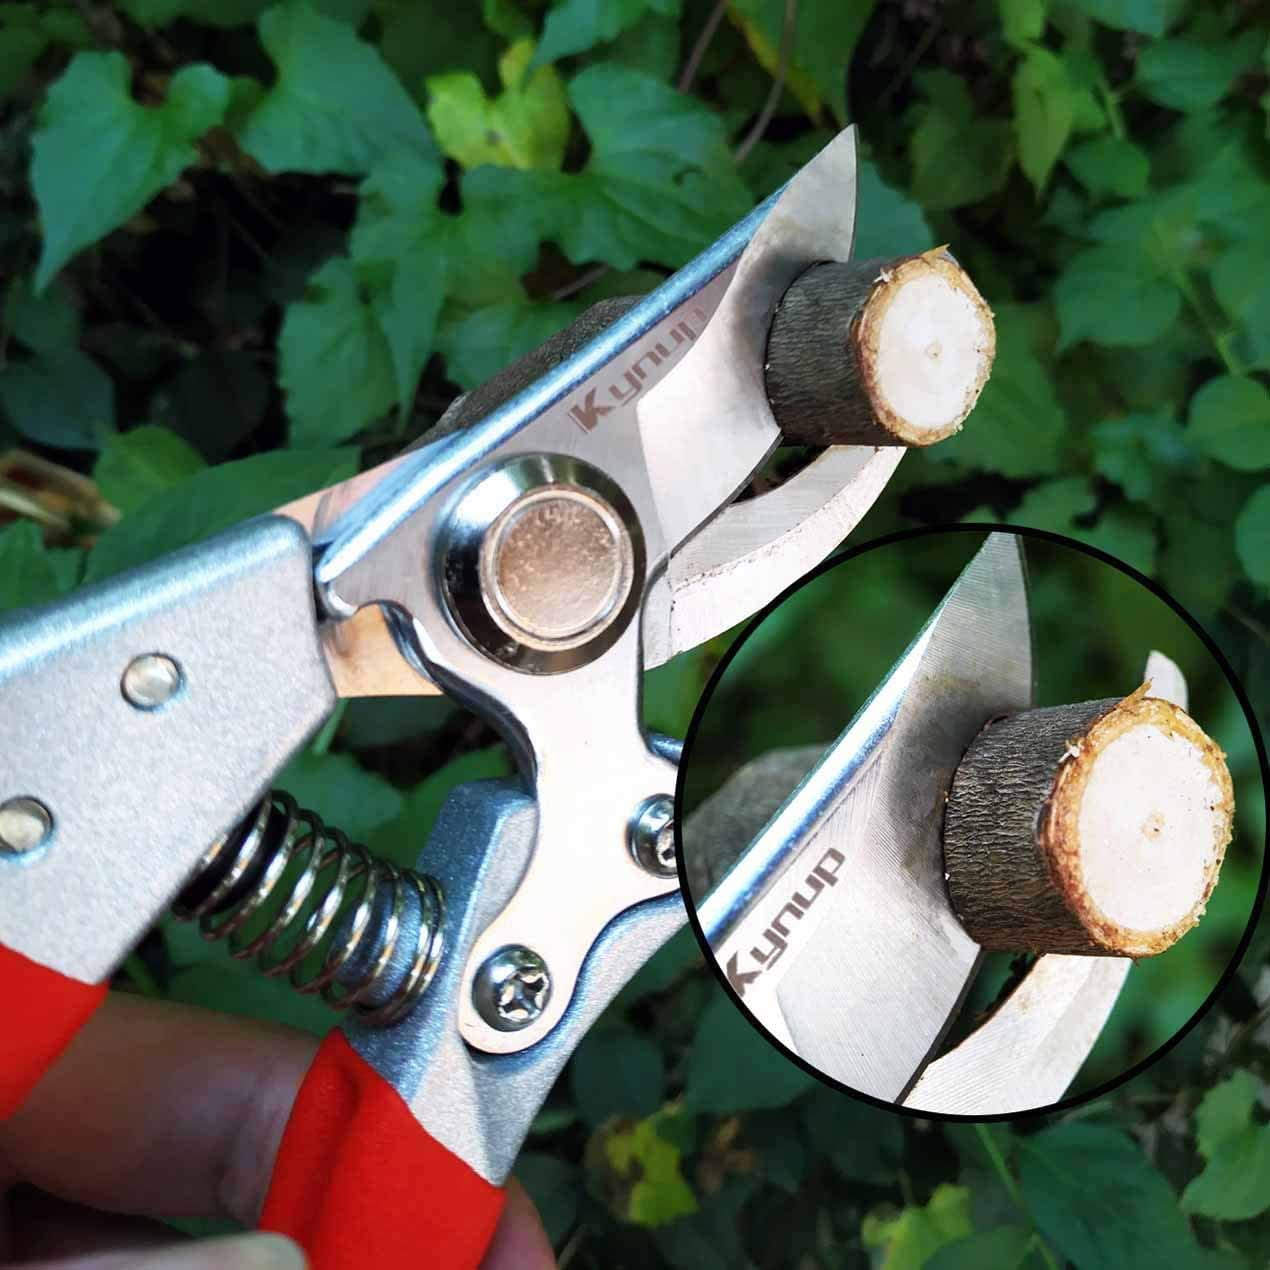 Haus & Garten ClassicPRO 8.5 Bypass Pruning Shears - Premium Garden Shears  - Use As Gardening Shears, Garden Clippers, Handheld Heavy-Duty